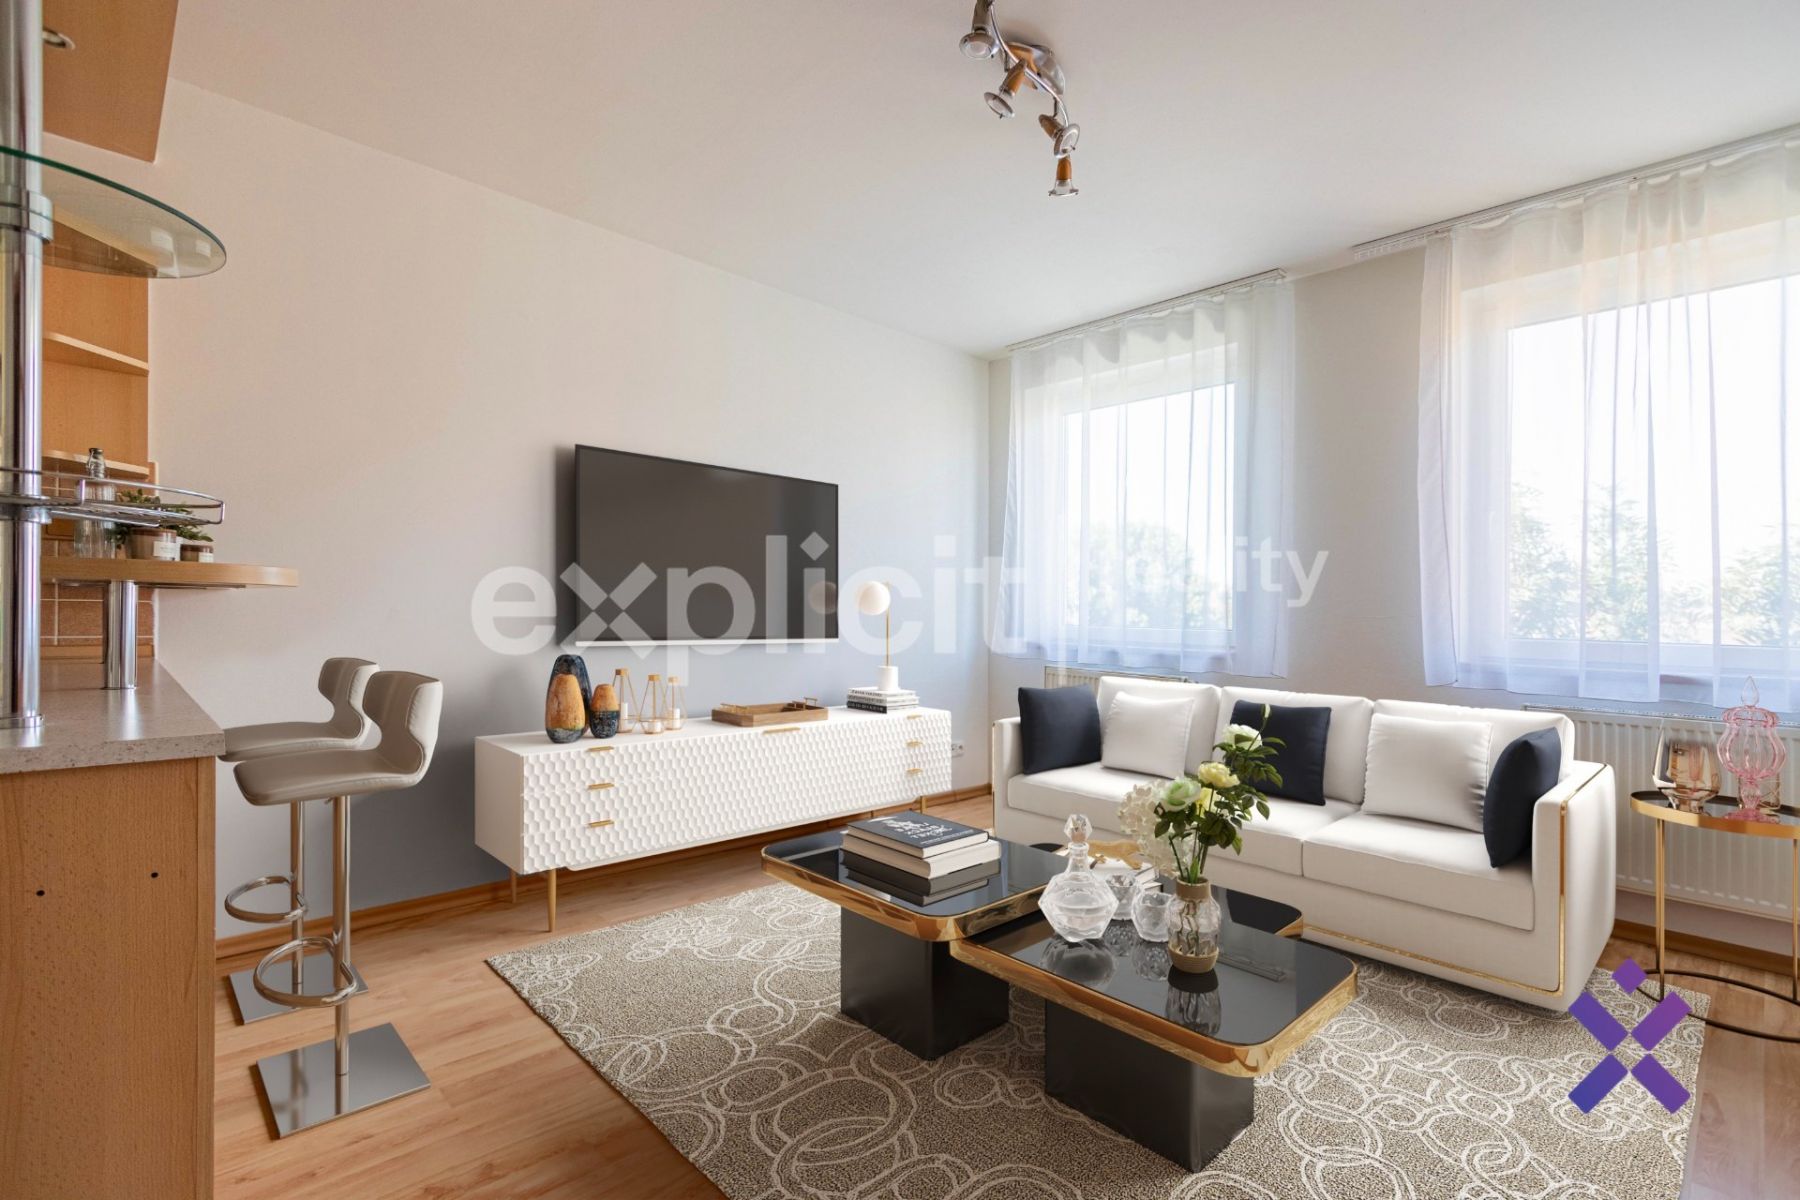 Prodej bytu 2+kk, 52 m2, ul. Sekaninova, Brno - Husovice